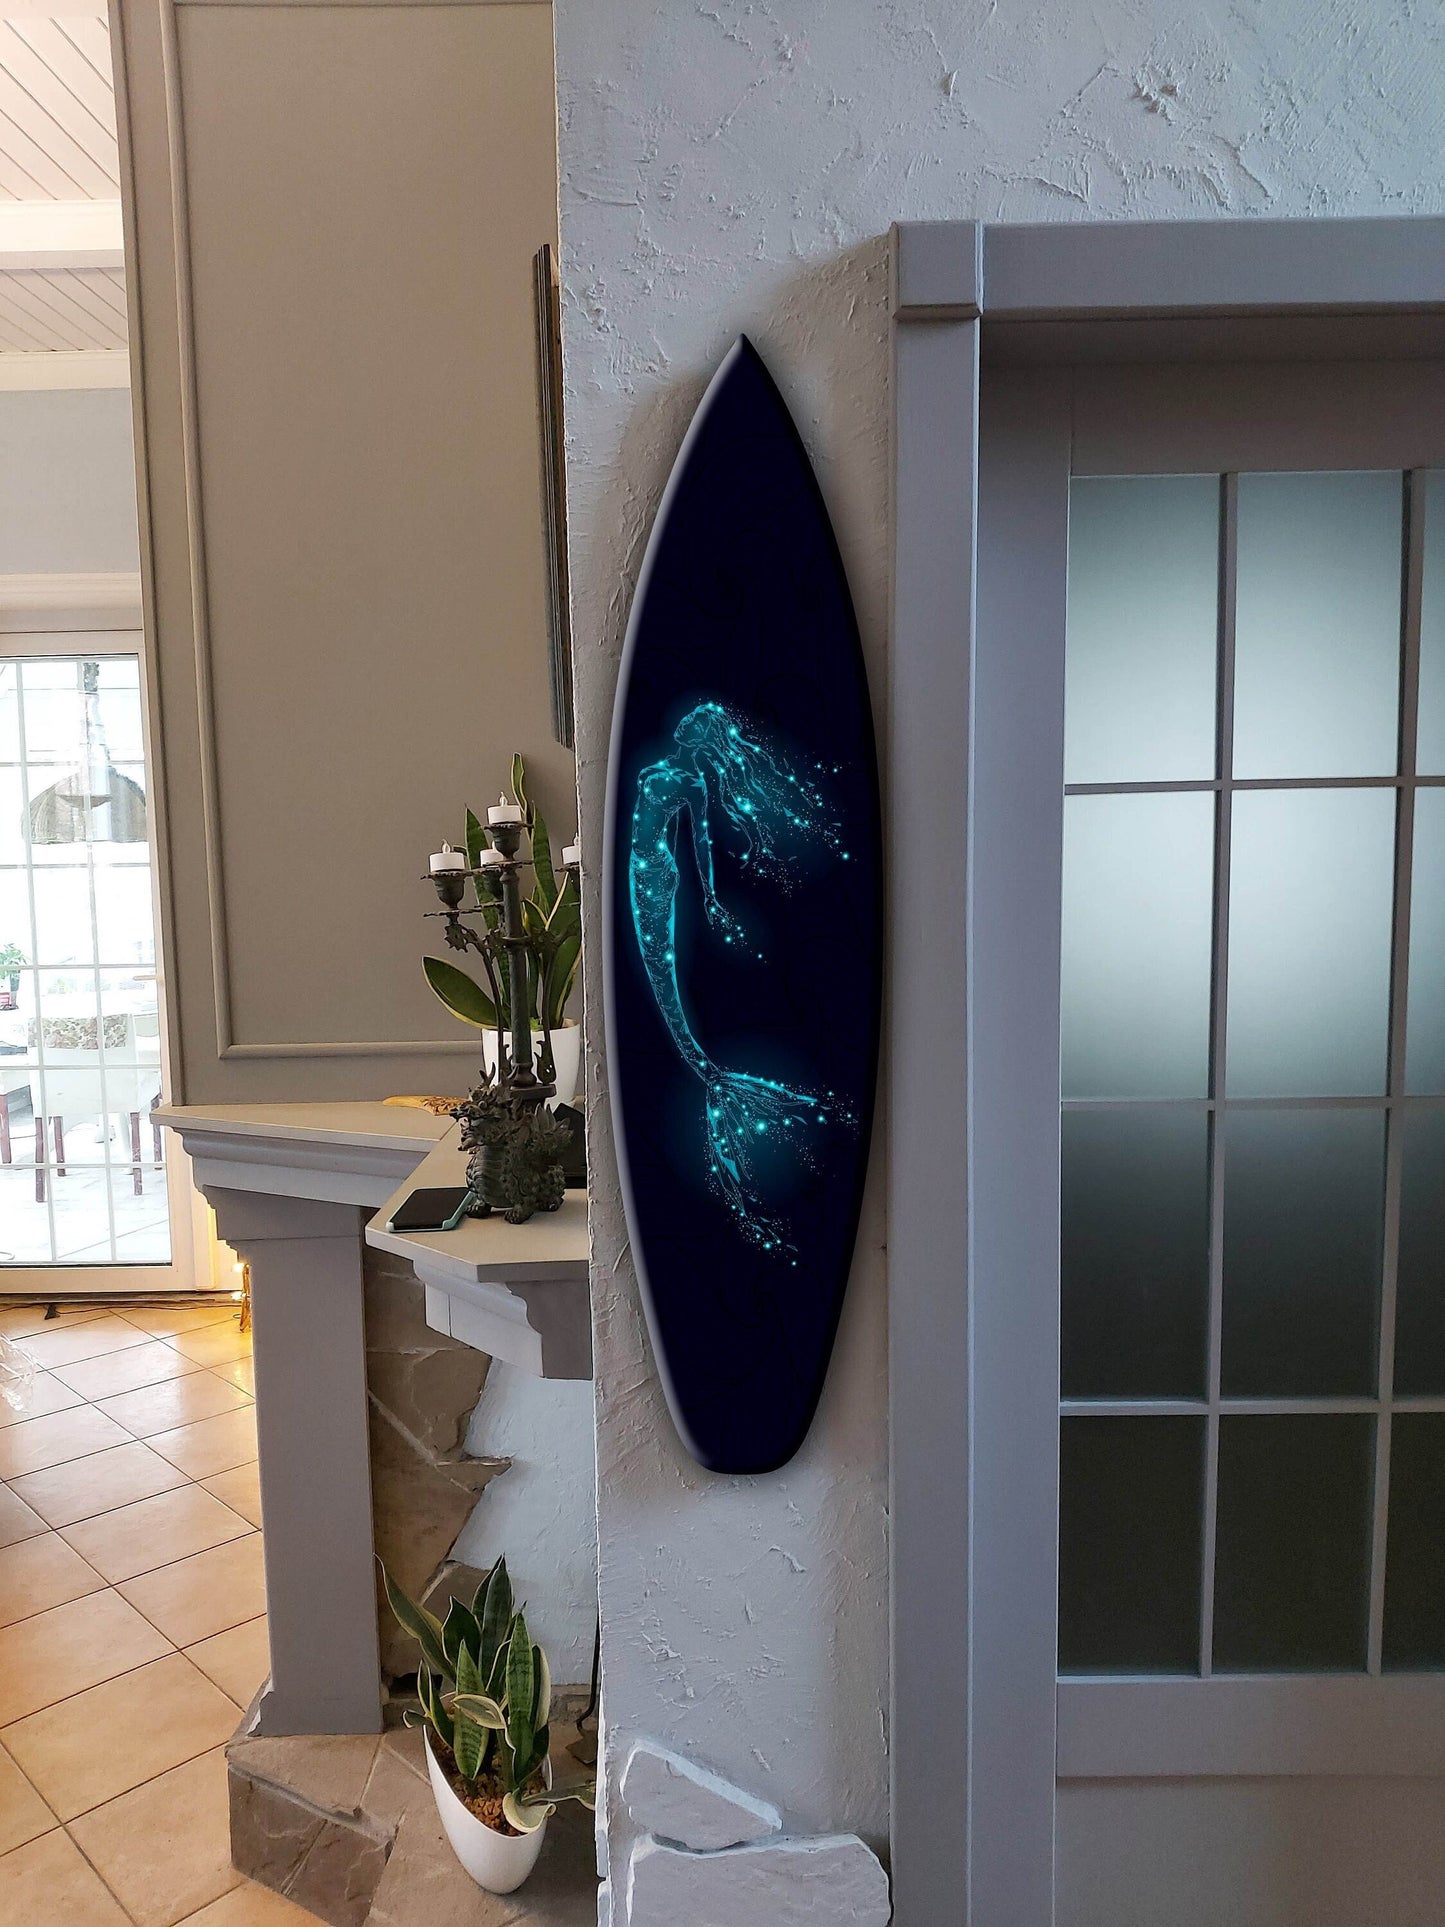 Decorative Surfboard Wall Artwork with Mermaid Pattern